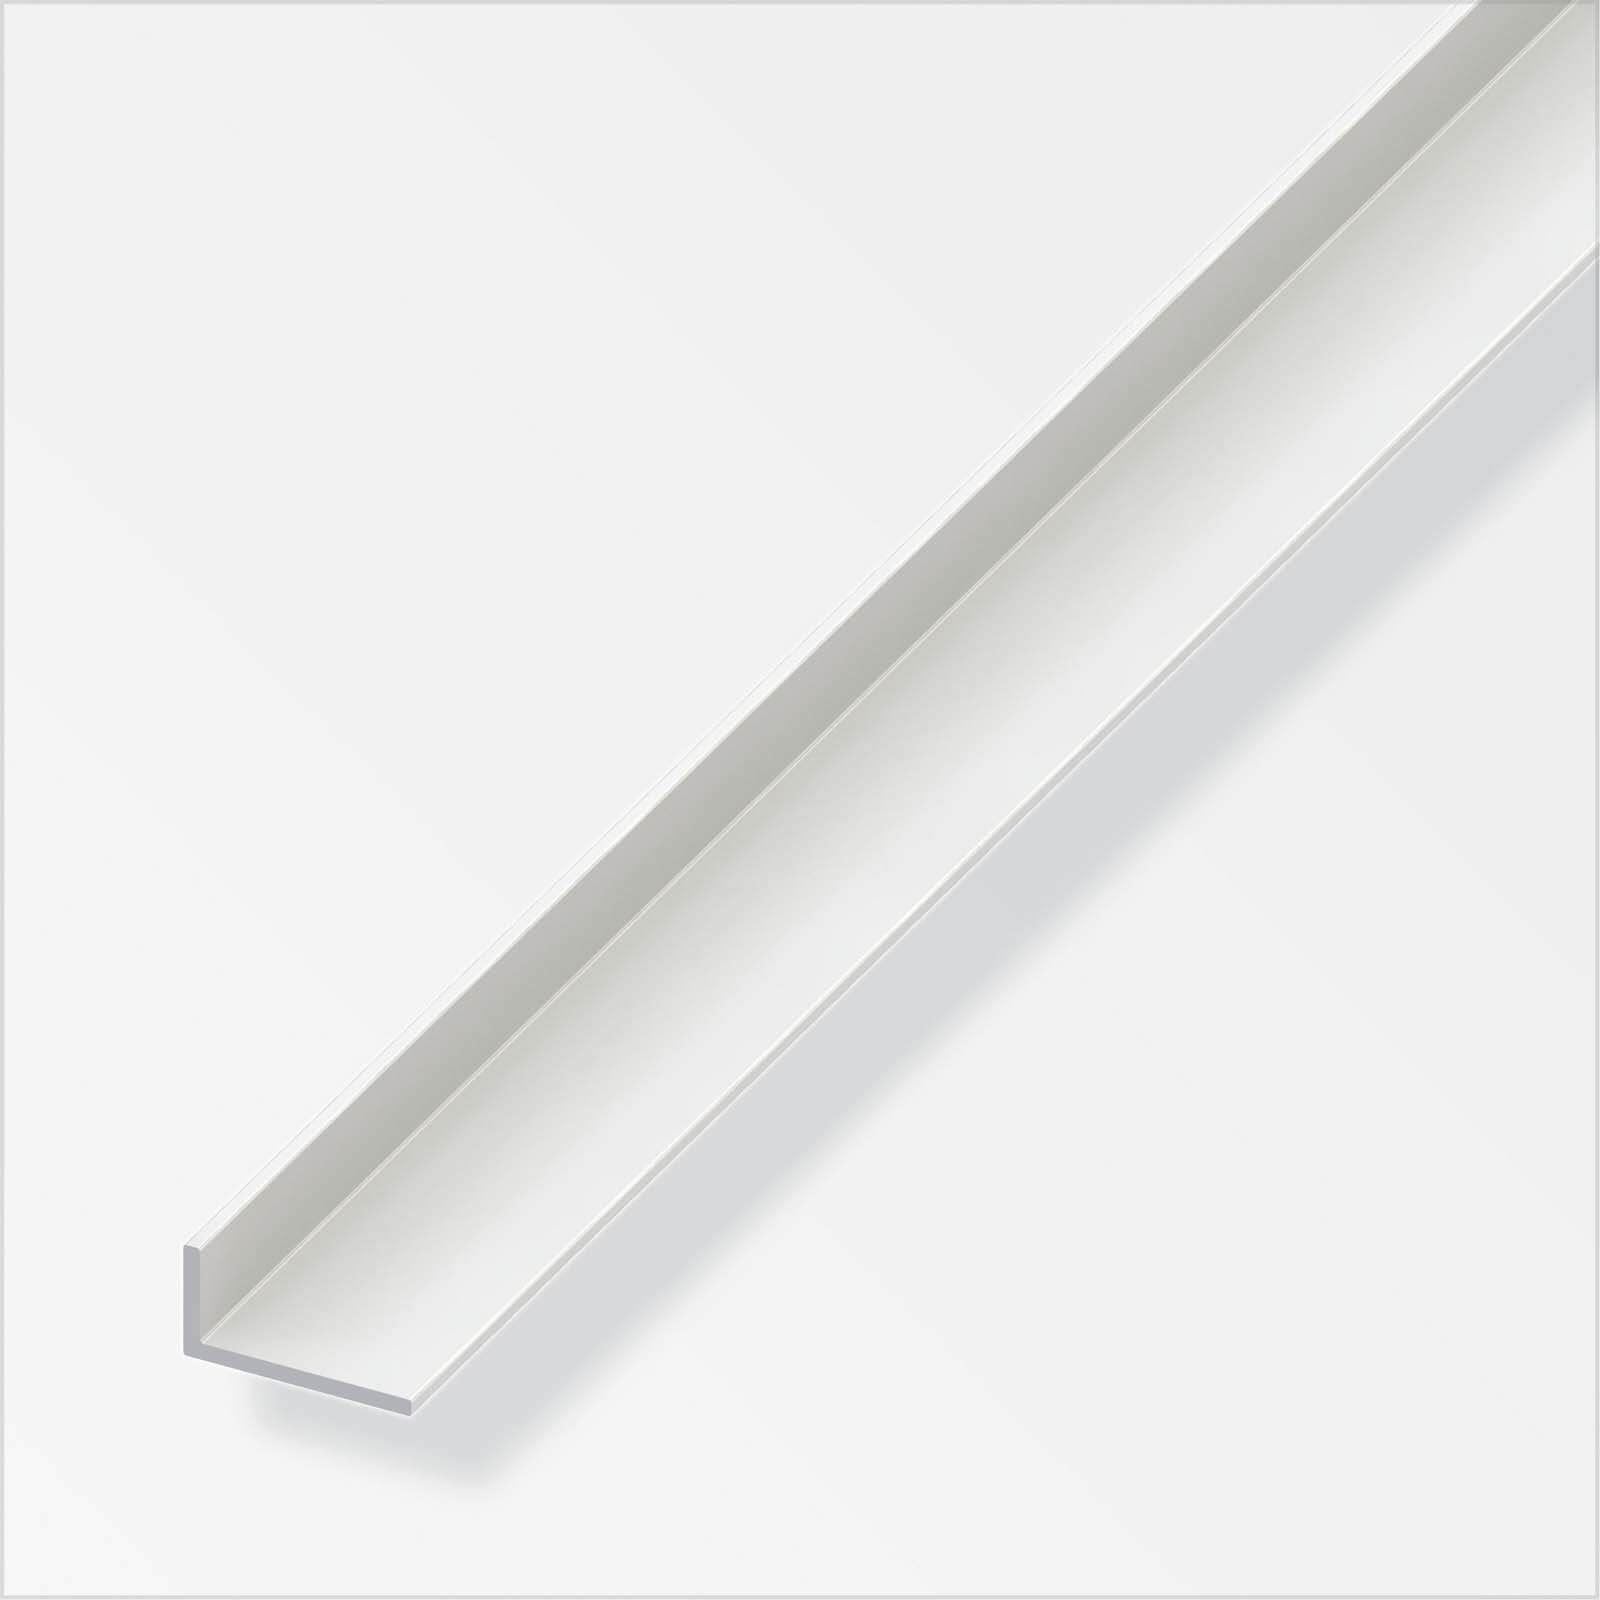 PVC Unequal Angle Profile - 1m x 30 x 20mm